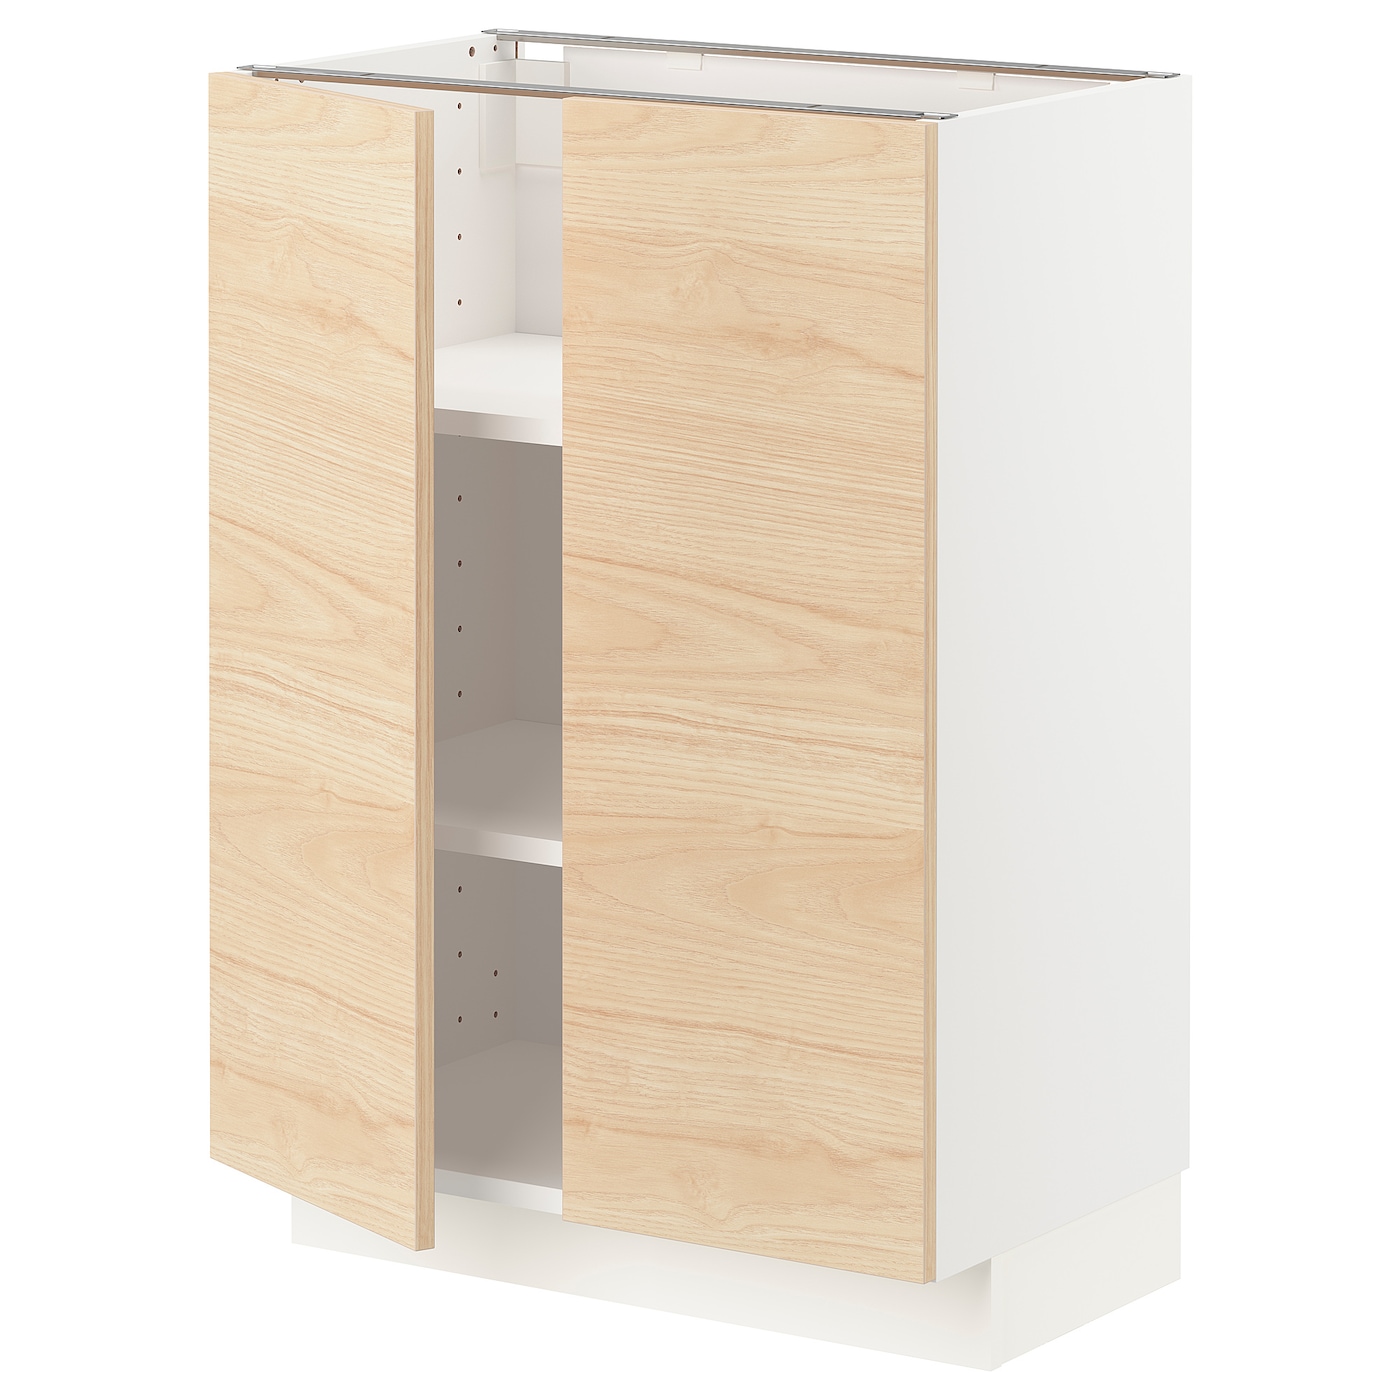 Шкаф под раковину  - IKEA METOD, 88x39x60см, белый/светлый ясень, МЕТОД ИКЕА